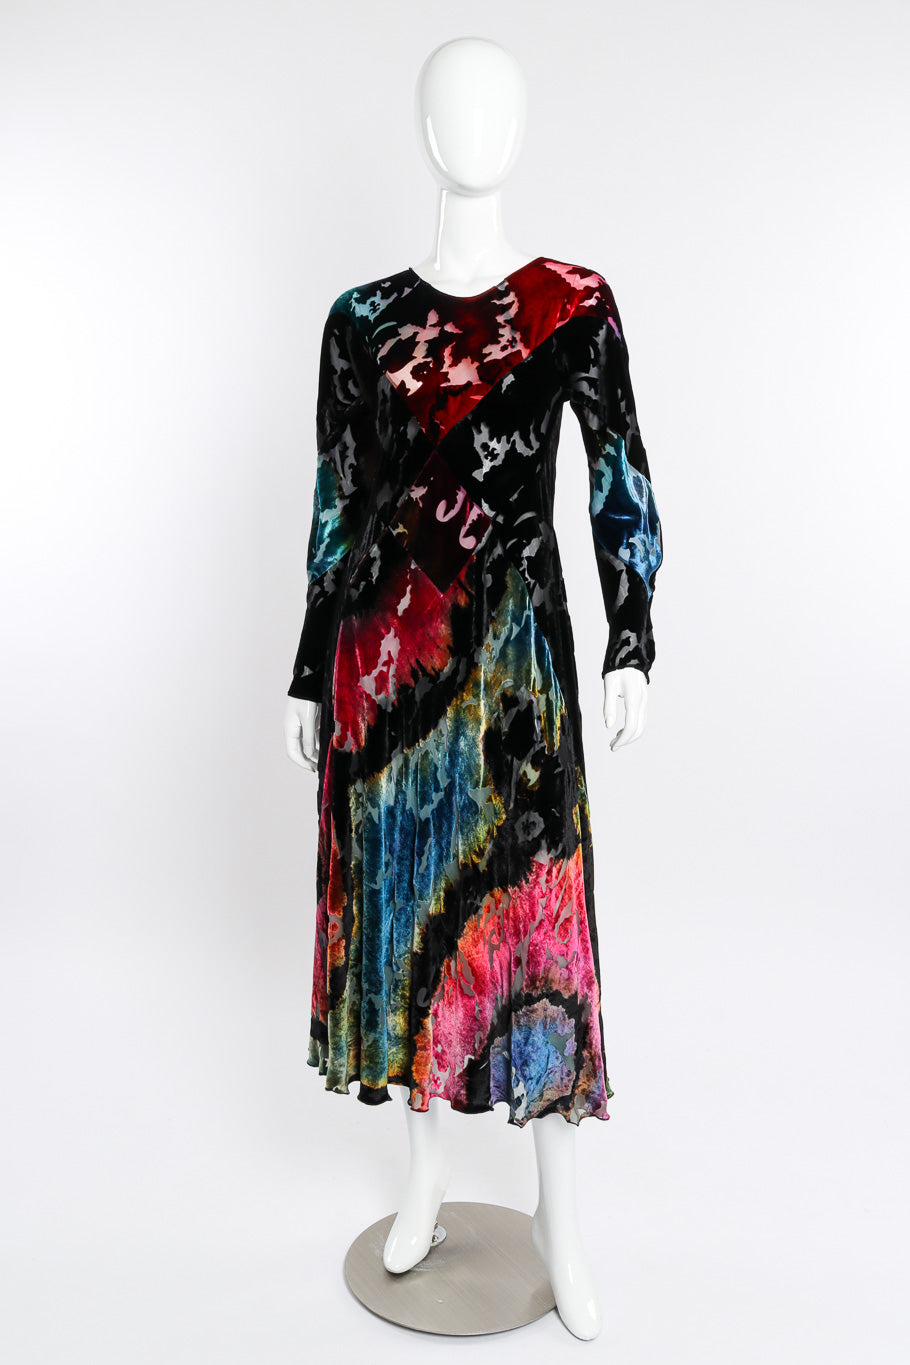 Velvet burnout dress by Carter Smith on mannequin @recessla